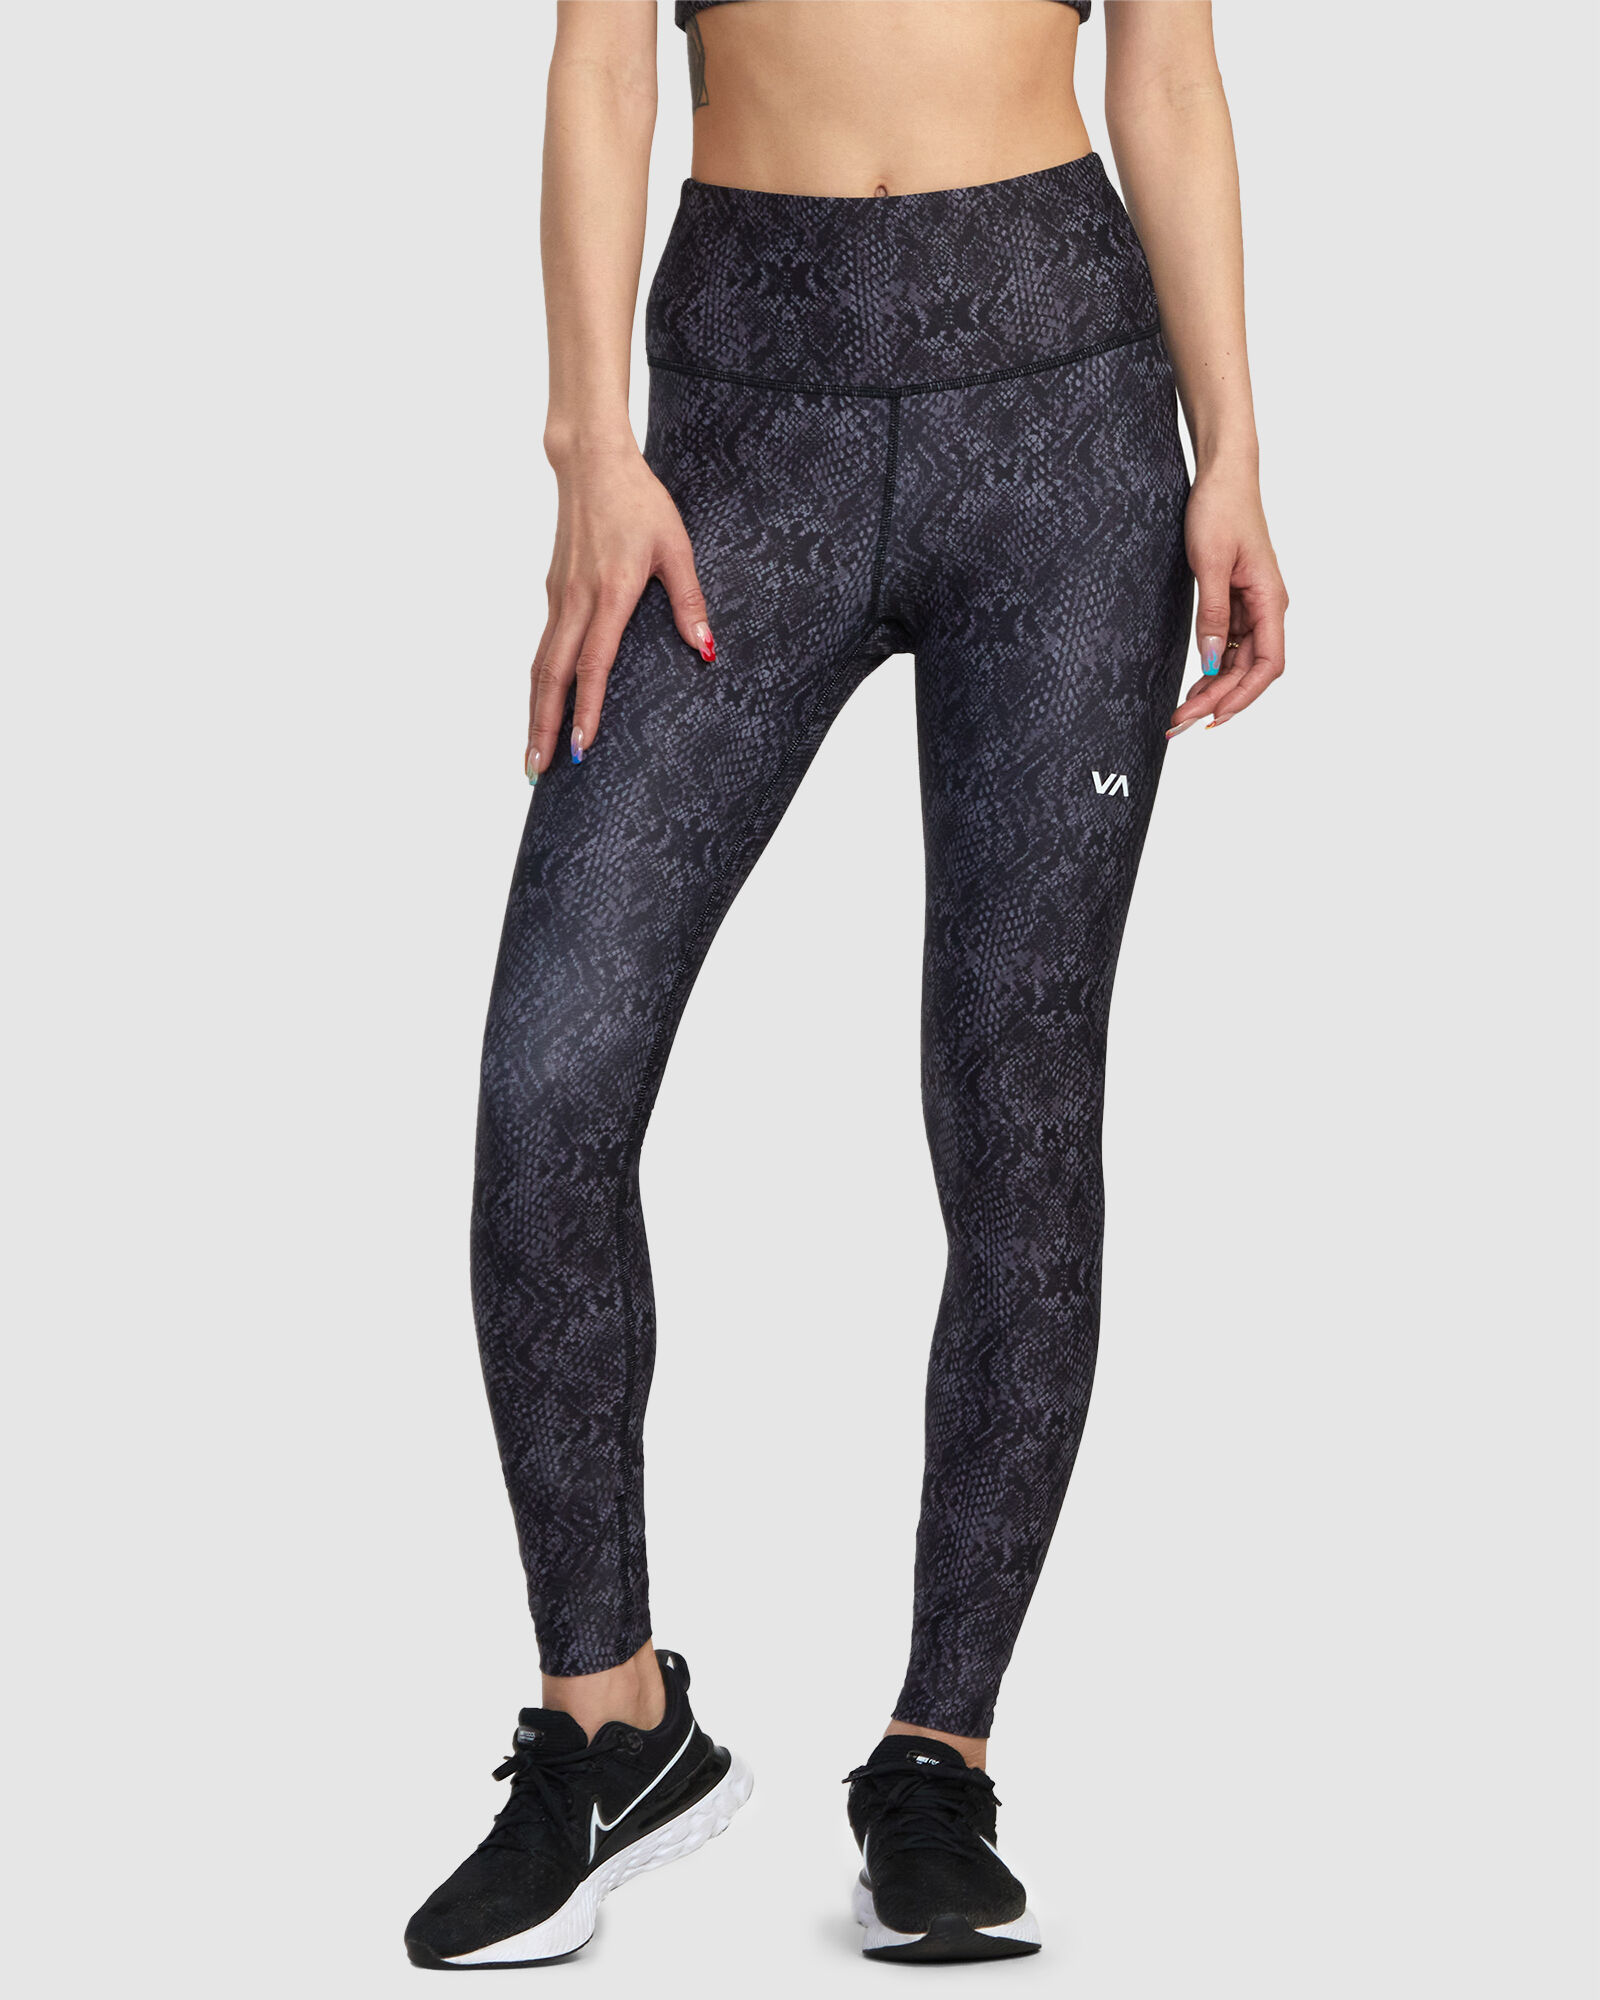 XS black athletic leggings, white and black mesh design - Depop